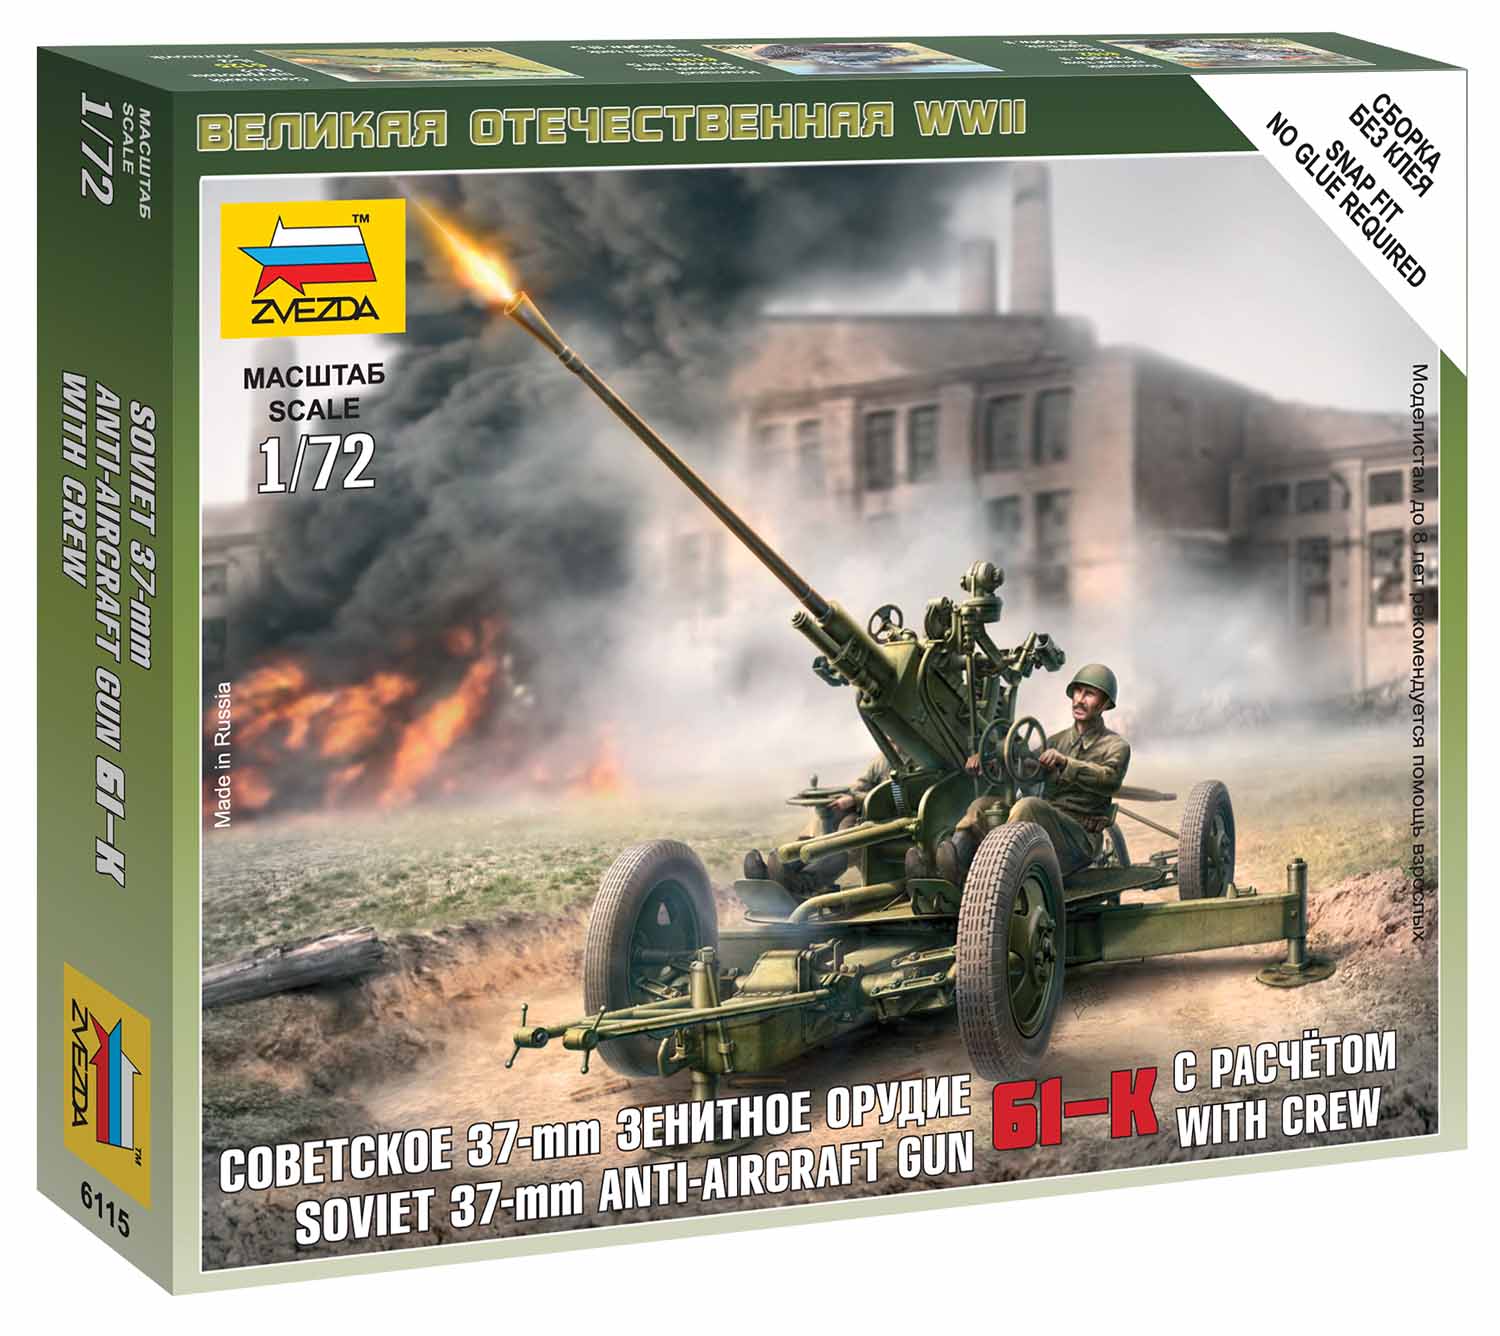 Zvezda Wargames (WWII) figurky 6115 - Soviet Anti-Aircraft Gun 61-K with Crew (1:72)